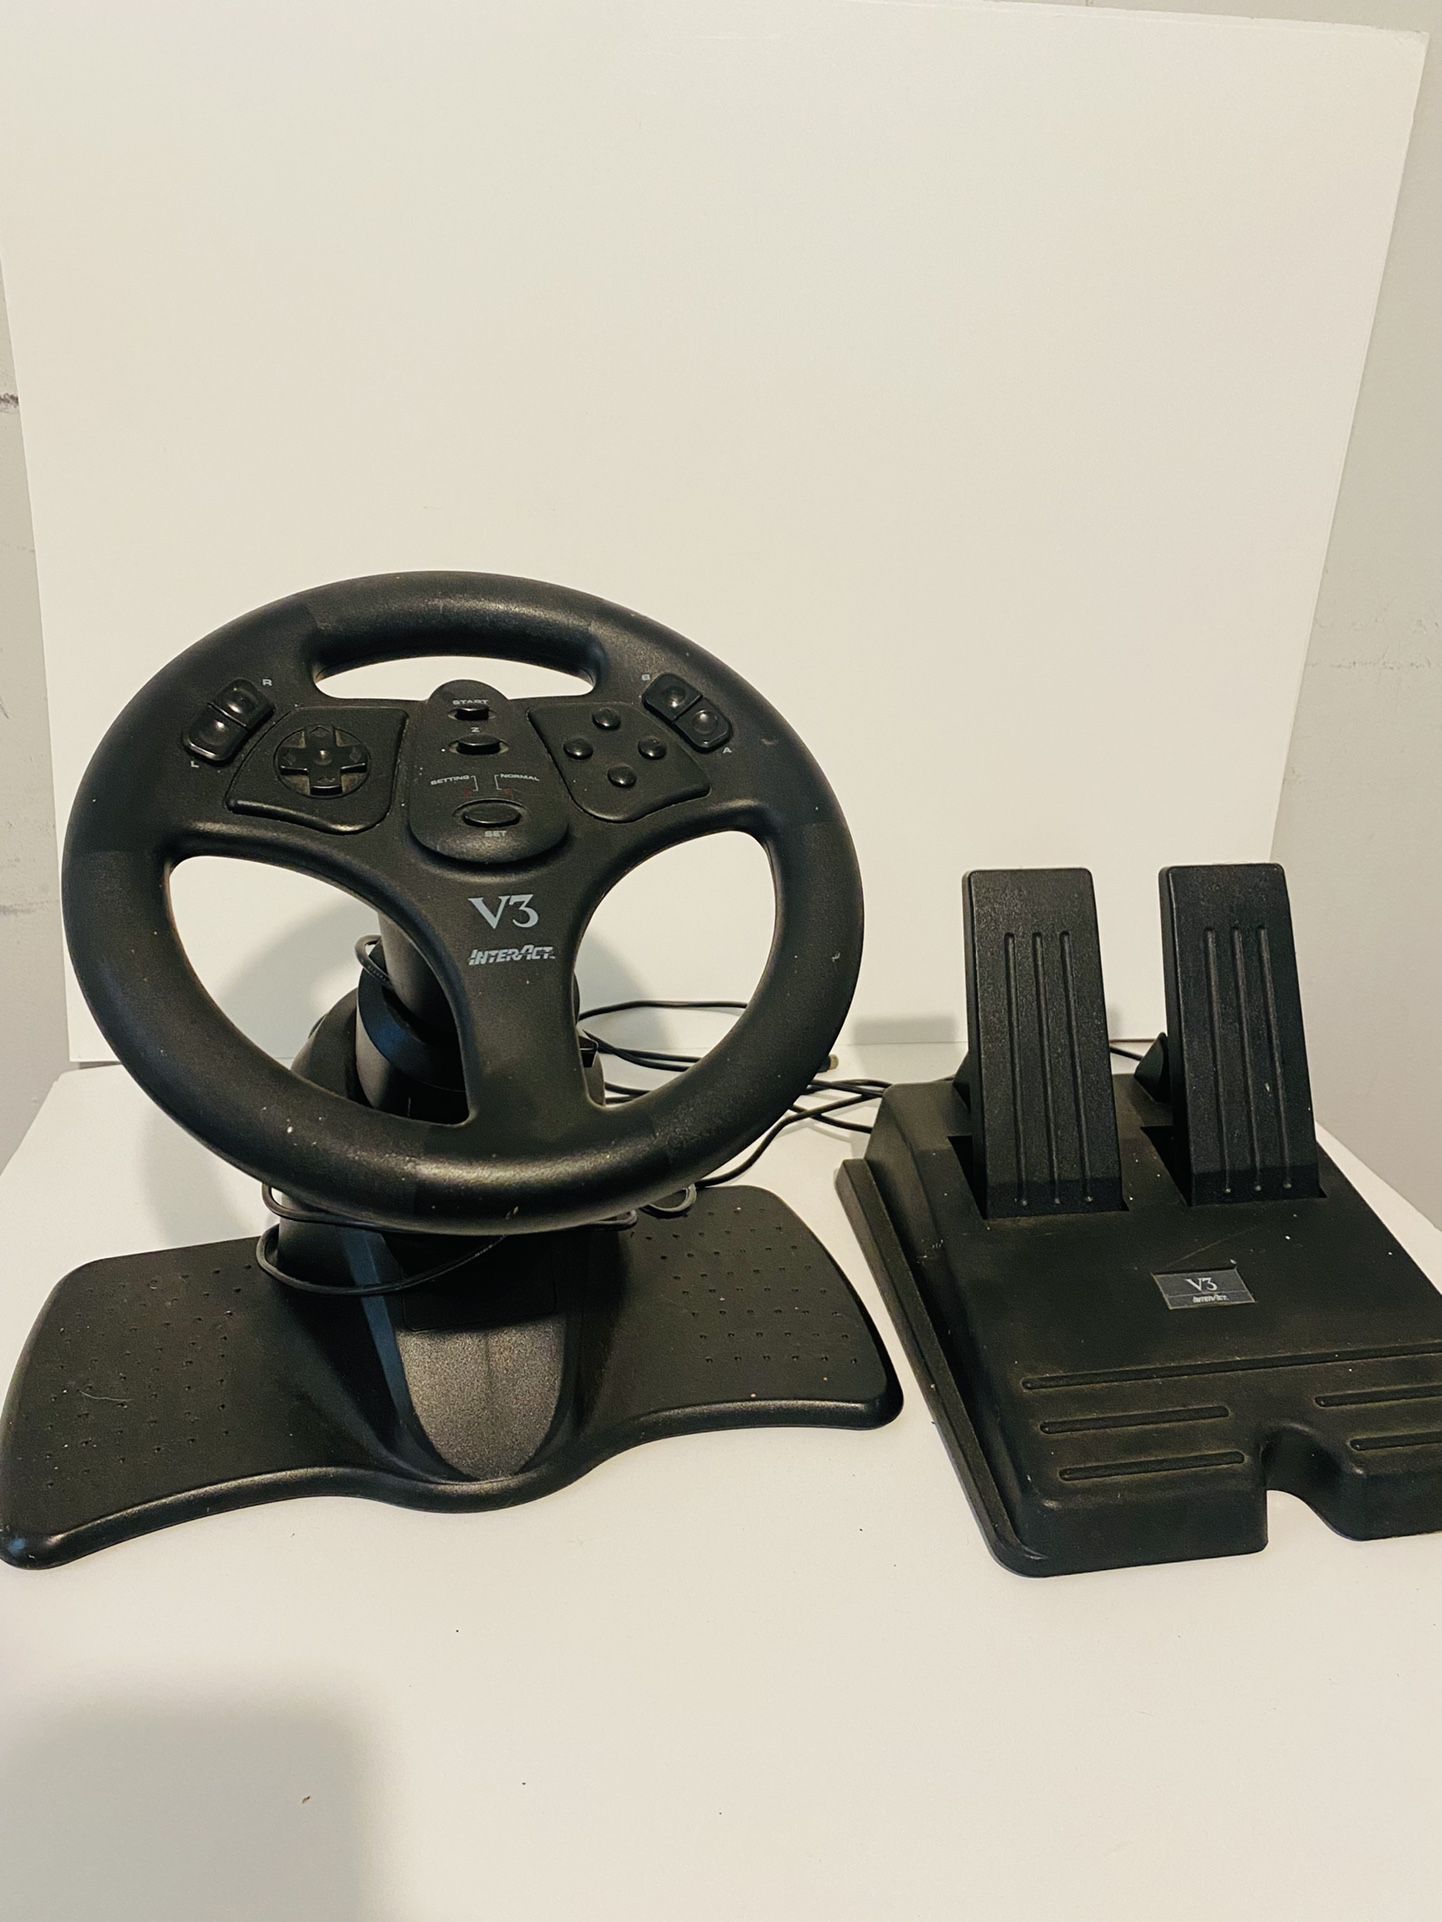 Nintendo 64 N64 V3FX Racing Wheel  InterAct Adjustable Steering Wheel And Pedals Works Like New 